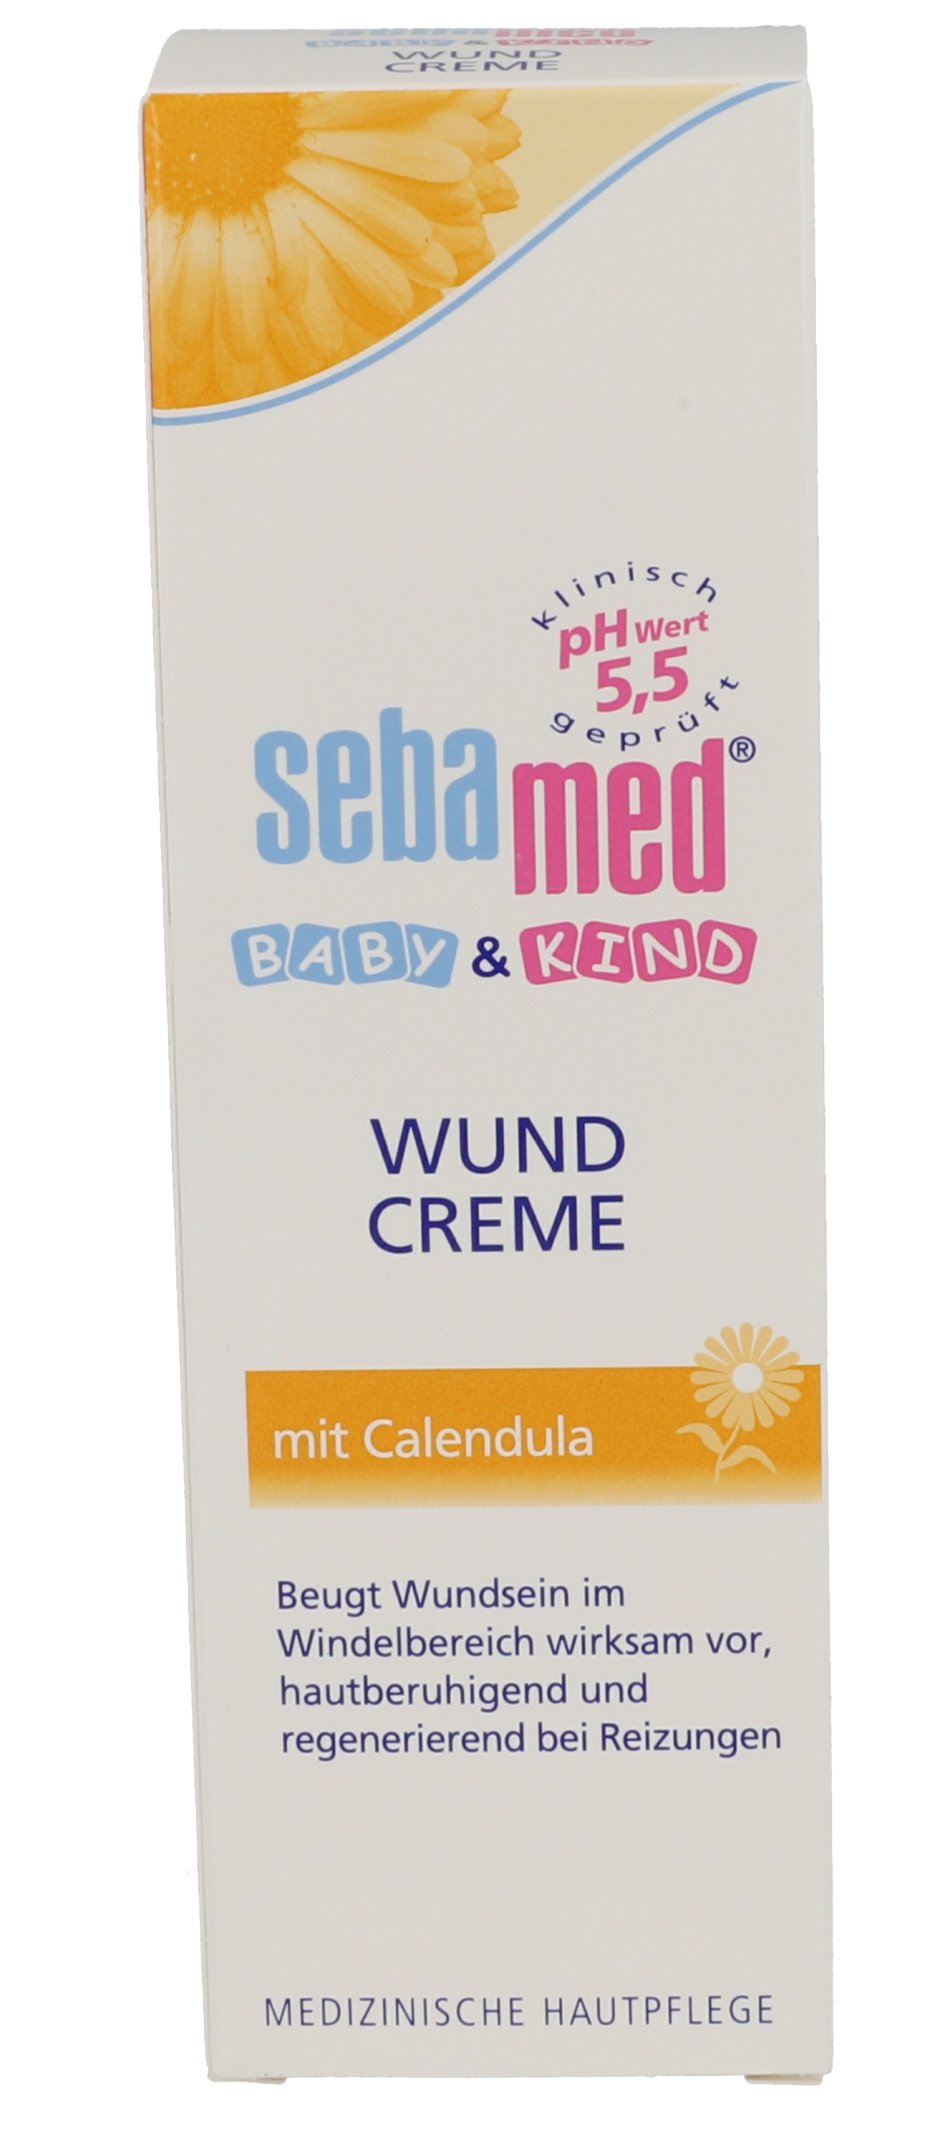 SEBAMED BABY & KIND Wundcreme m.Calendula